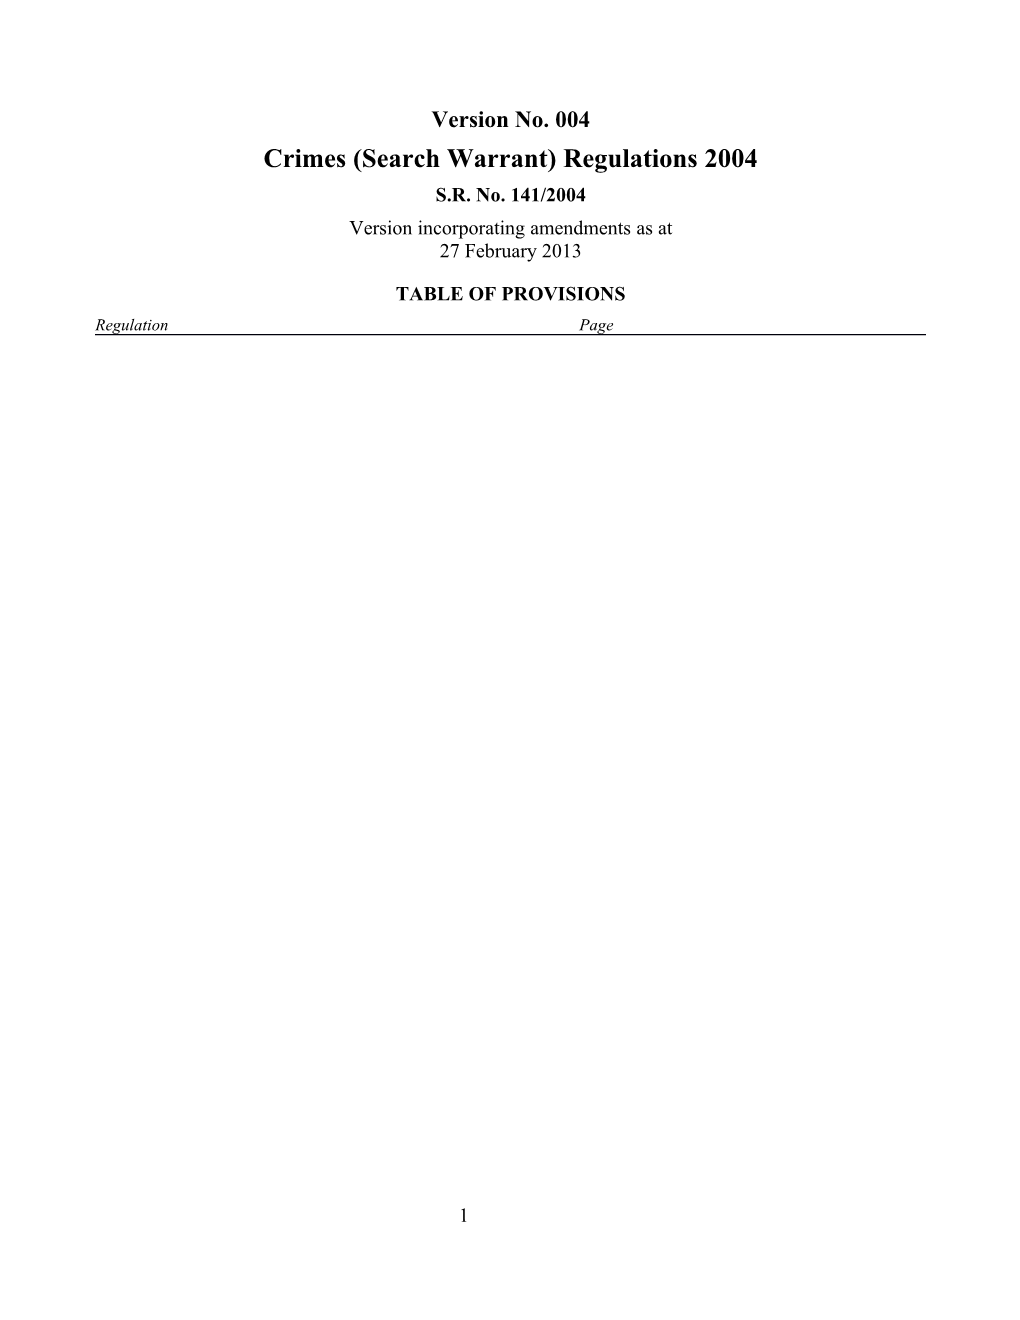 Crimes (Search Warrant) Regulations 2004